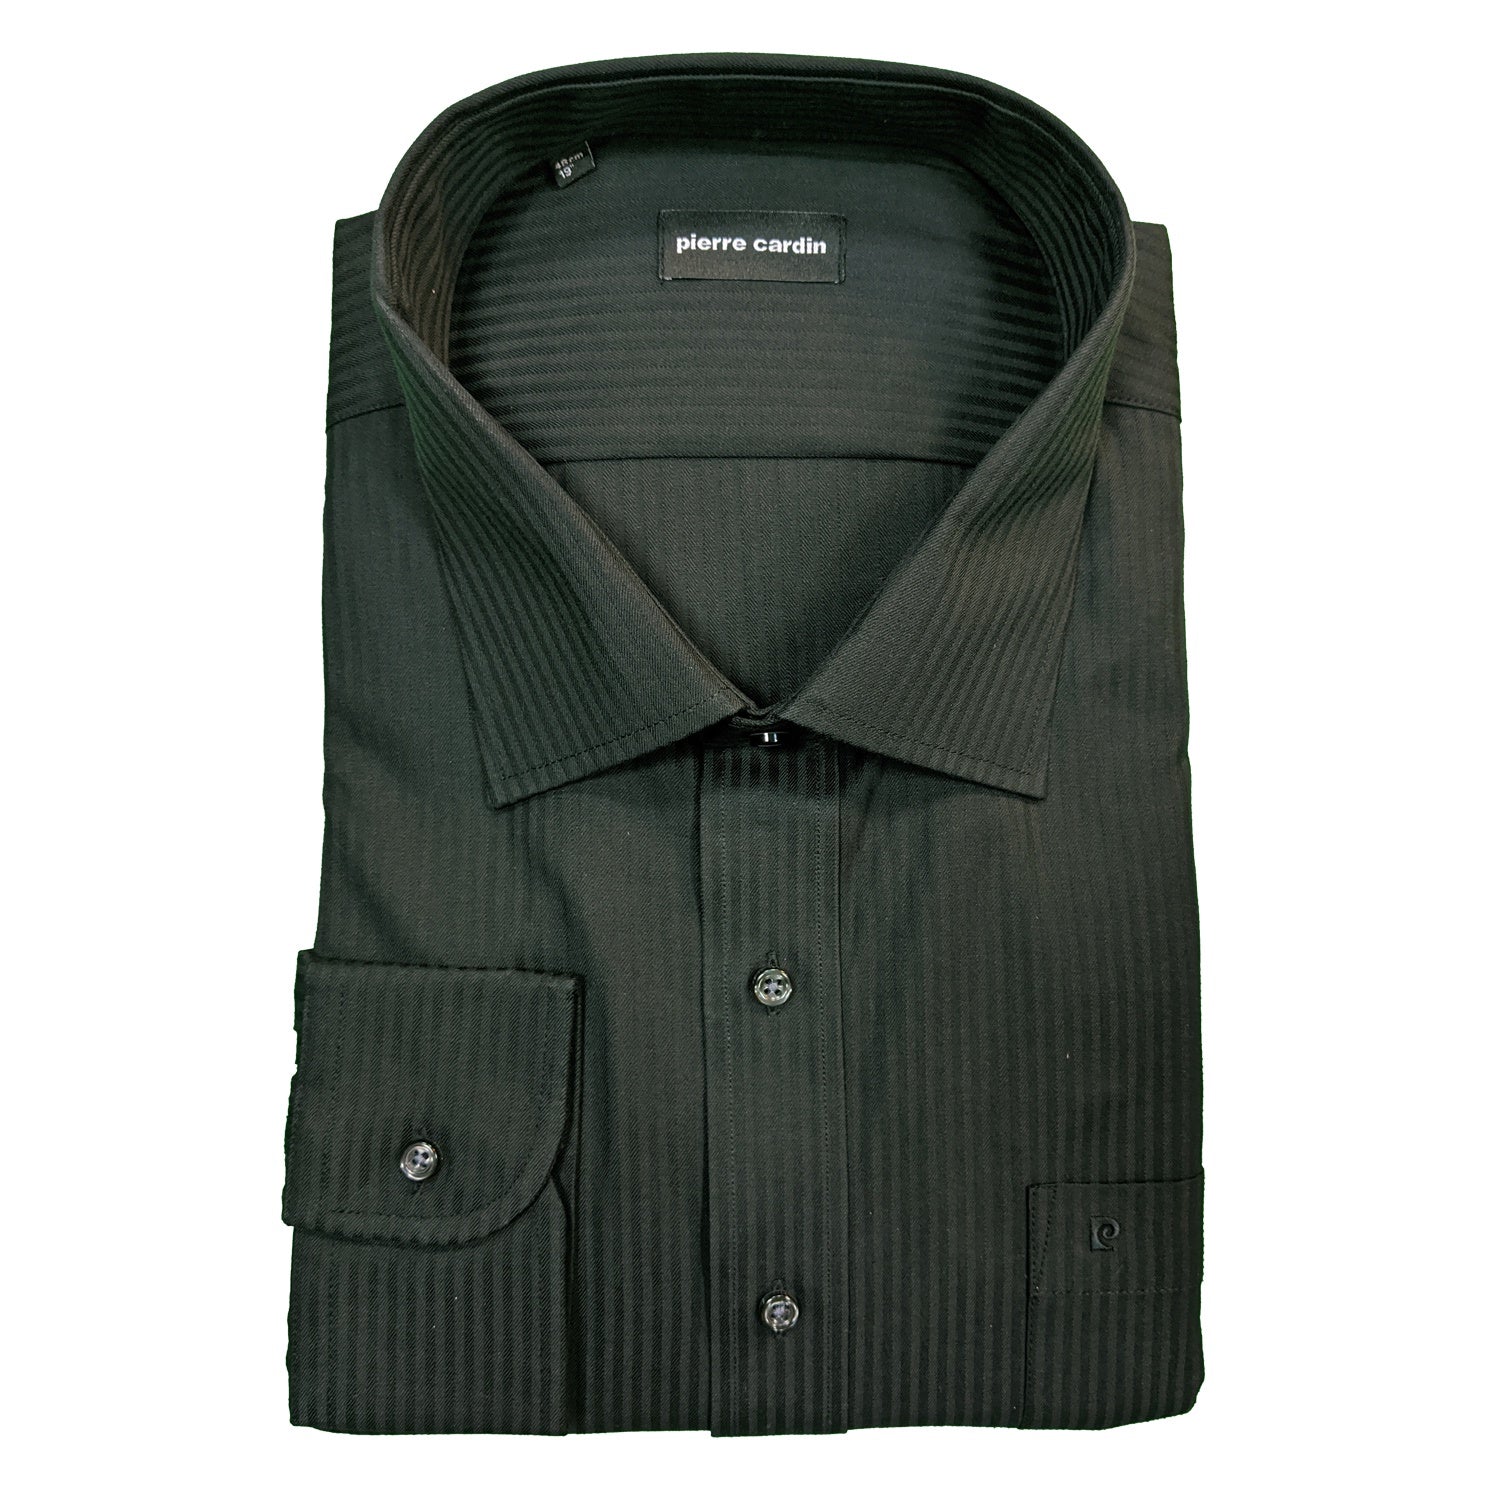 Pierre Cardin L/S Stripe Shirt - PC1809 - Black 1